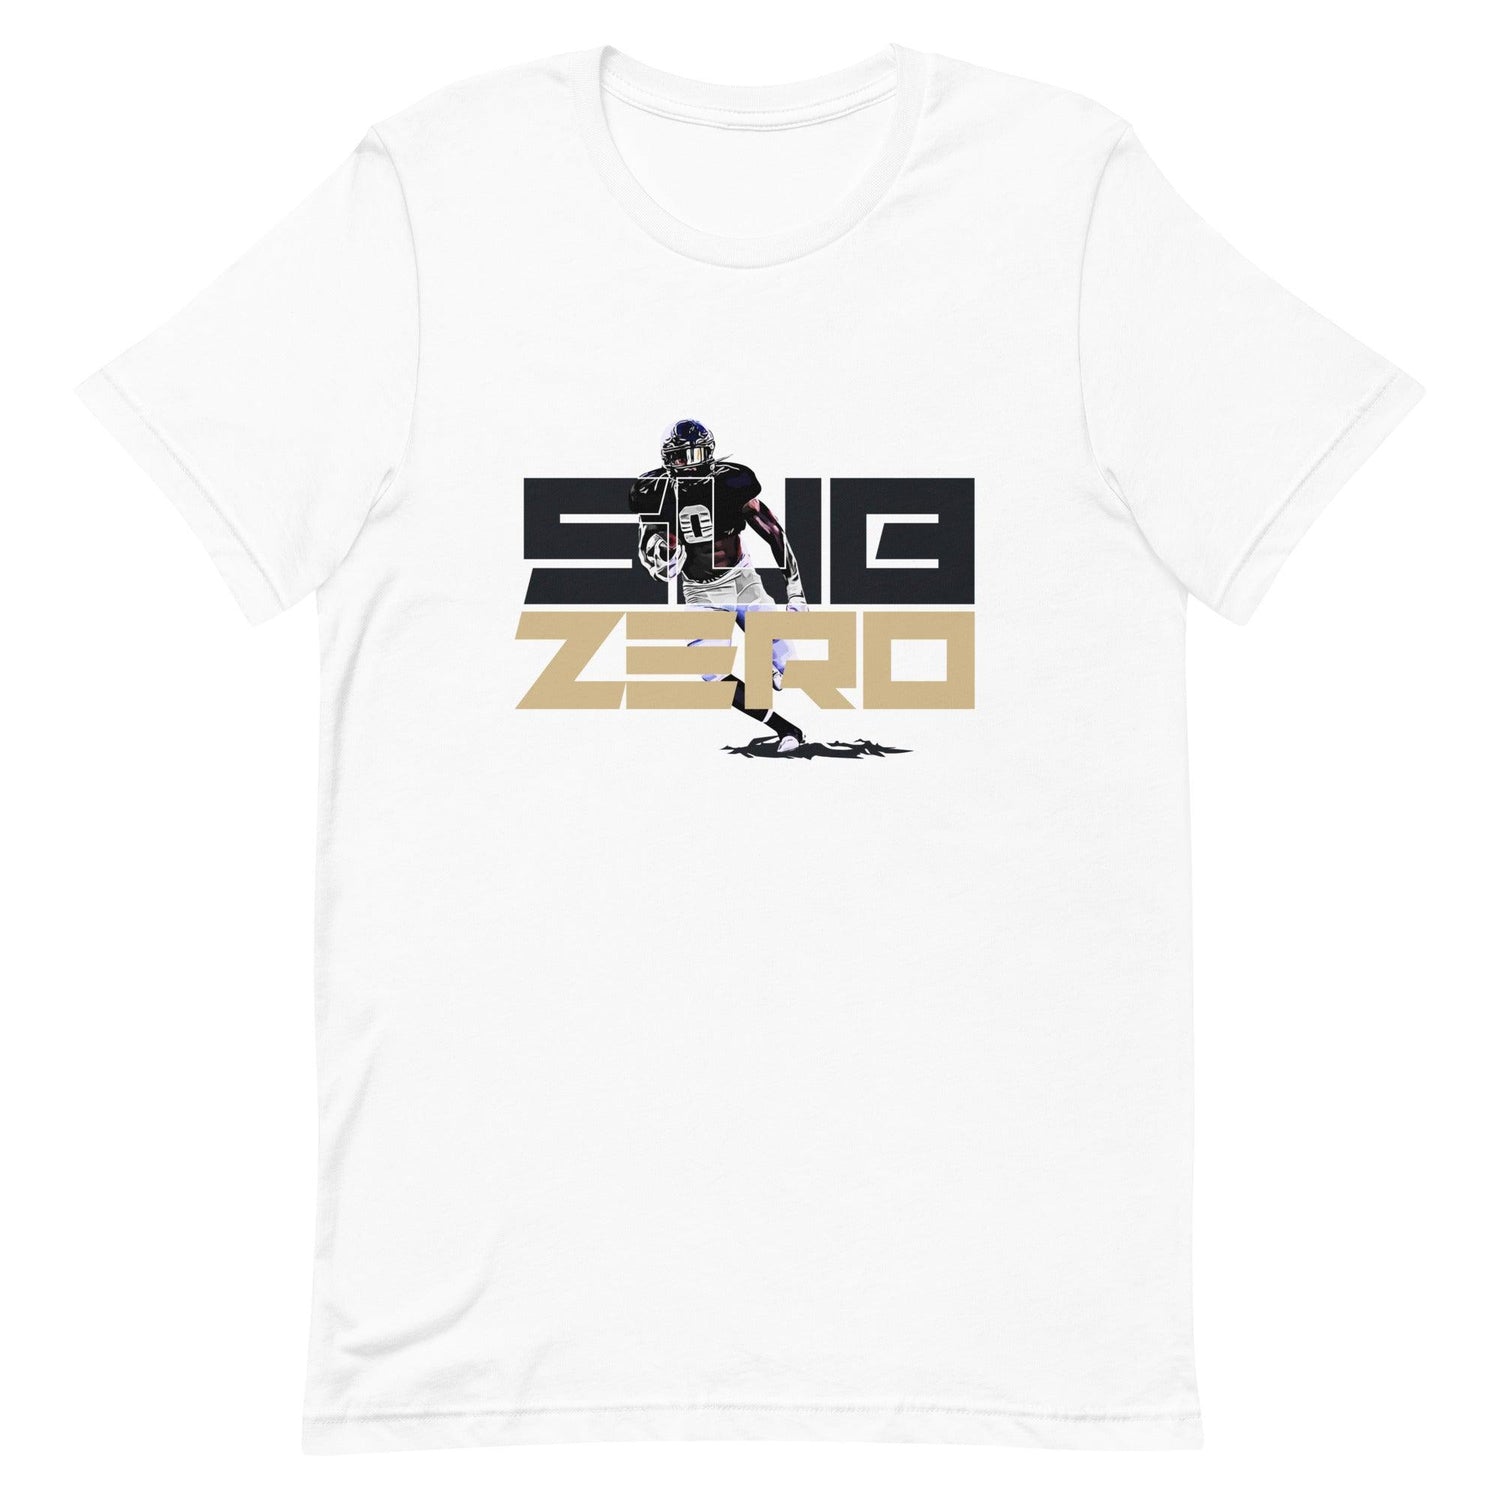 Christian Turner “Sub Zero” t-shirt - Fan Arch